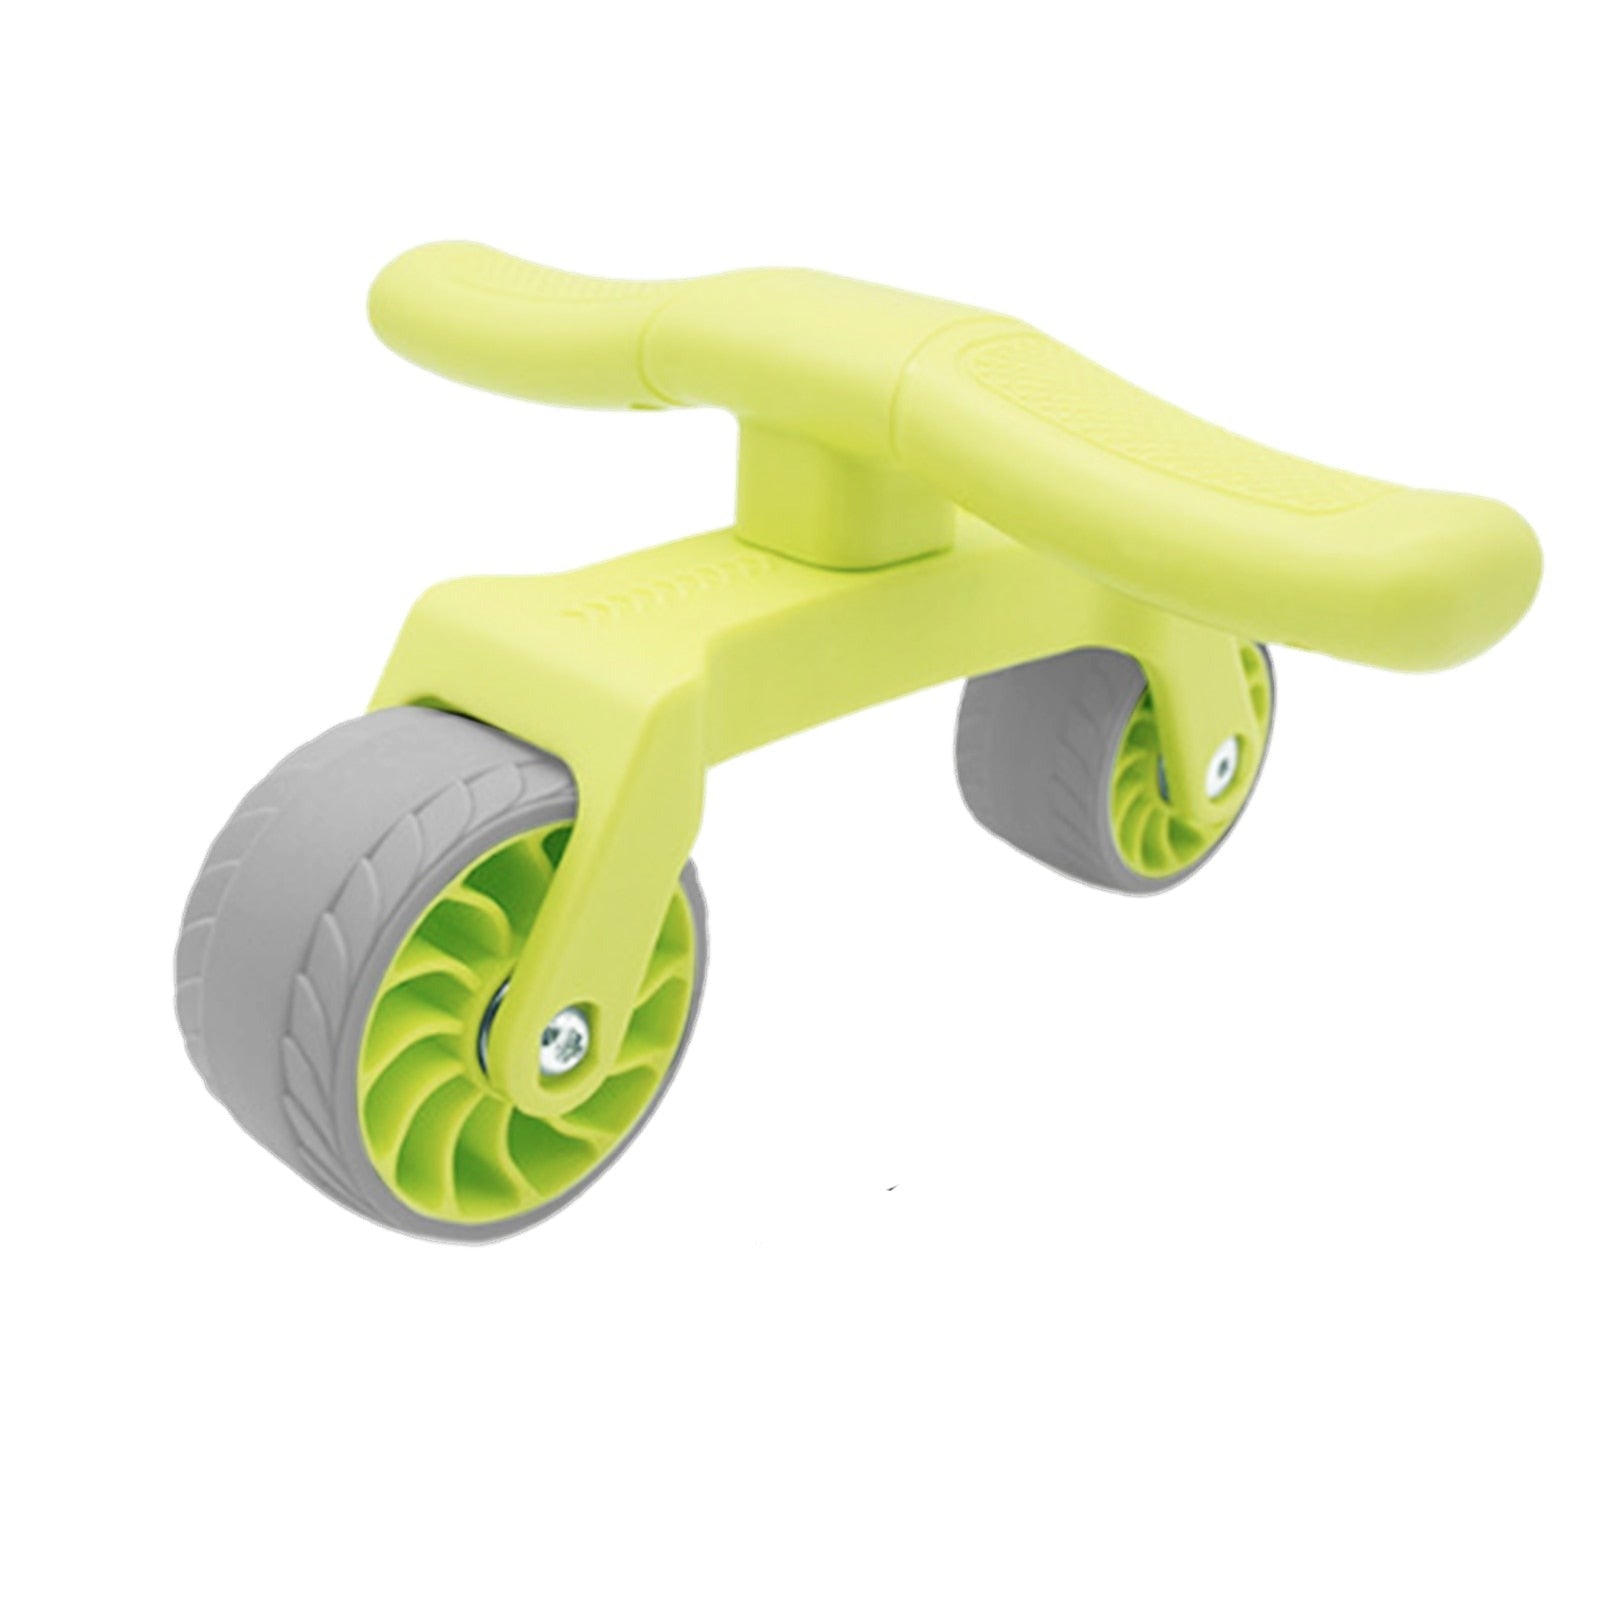 AB Wheel Workout Roller